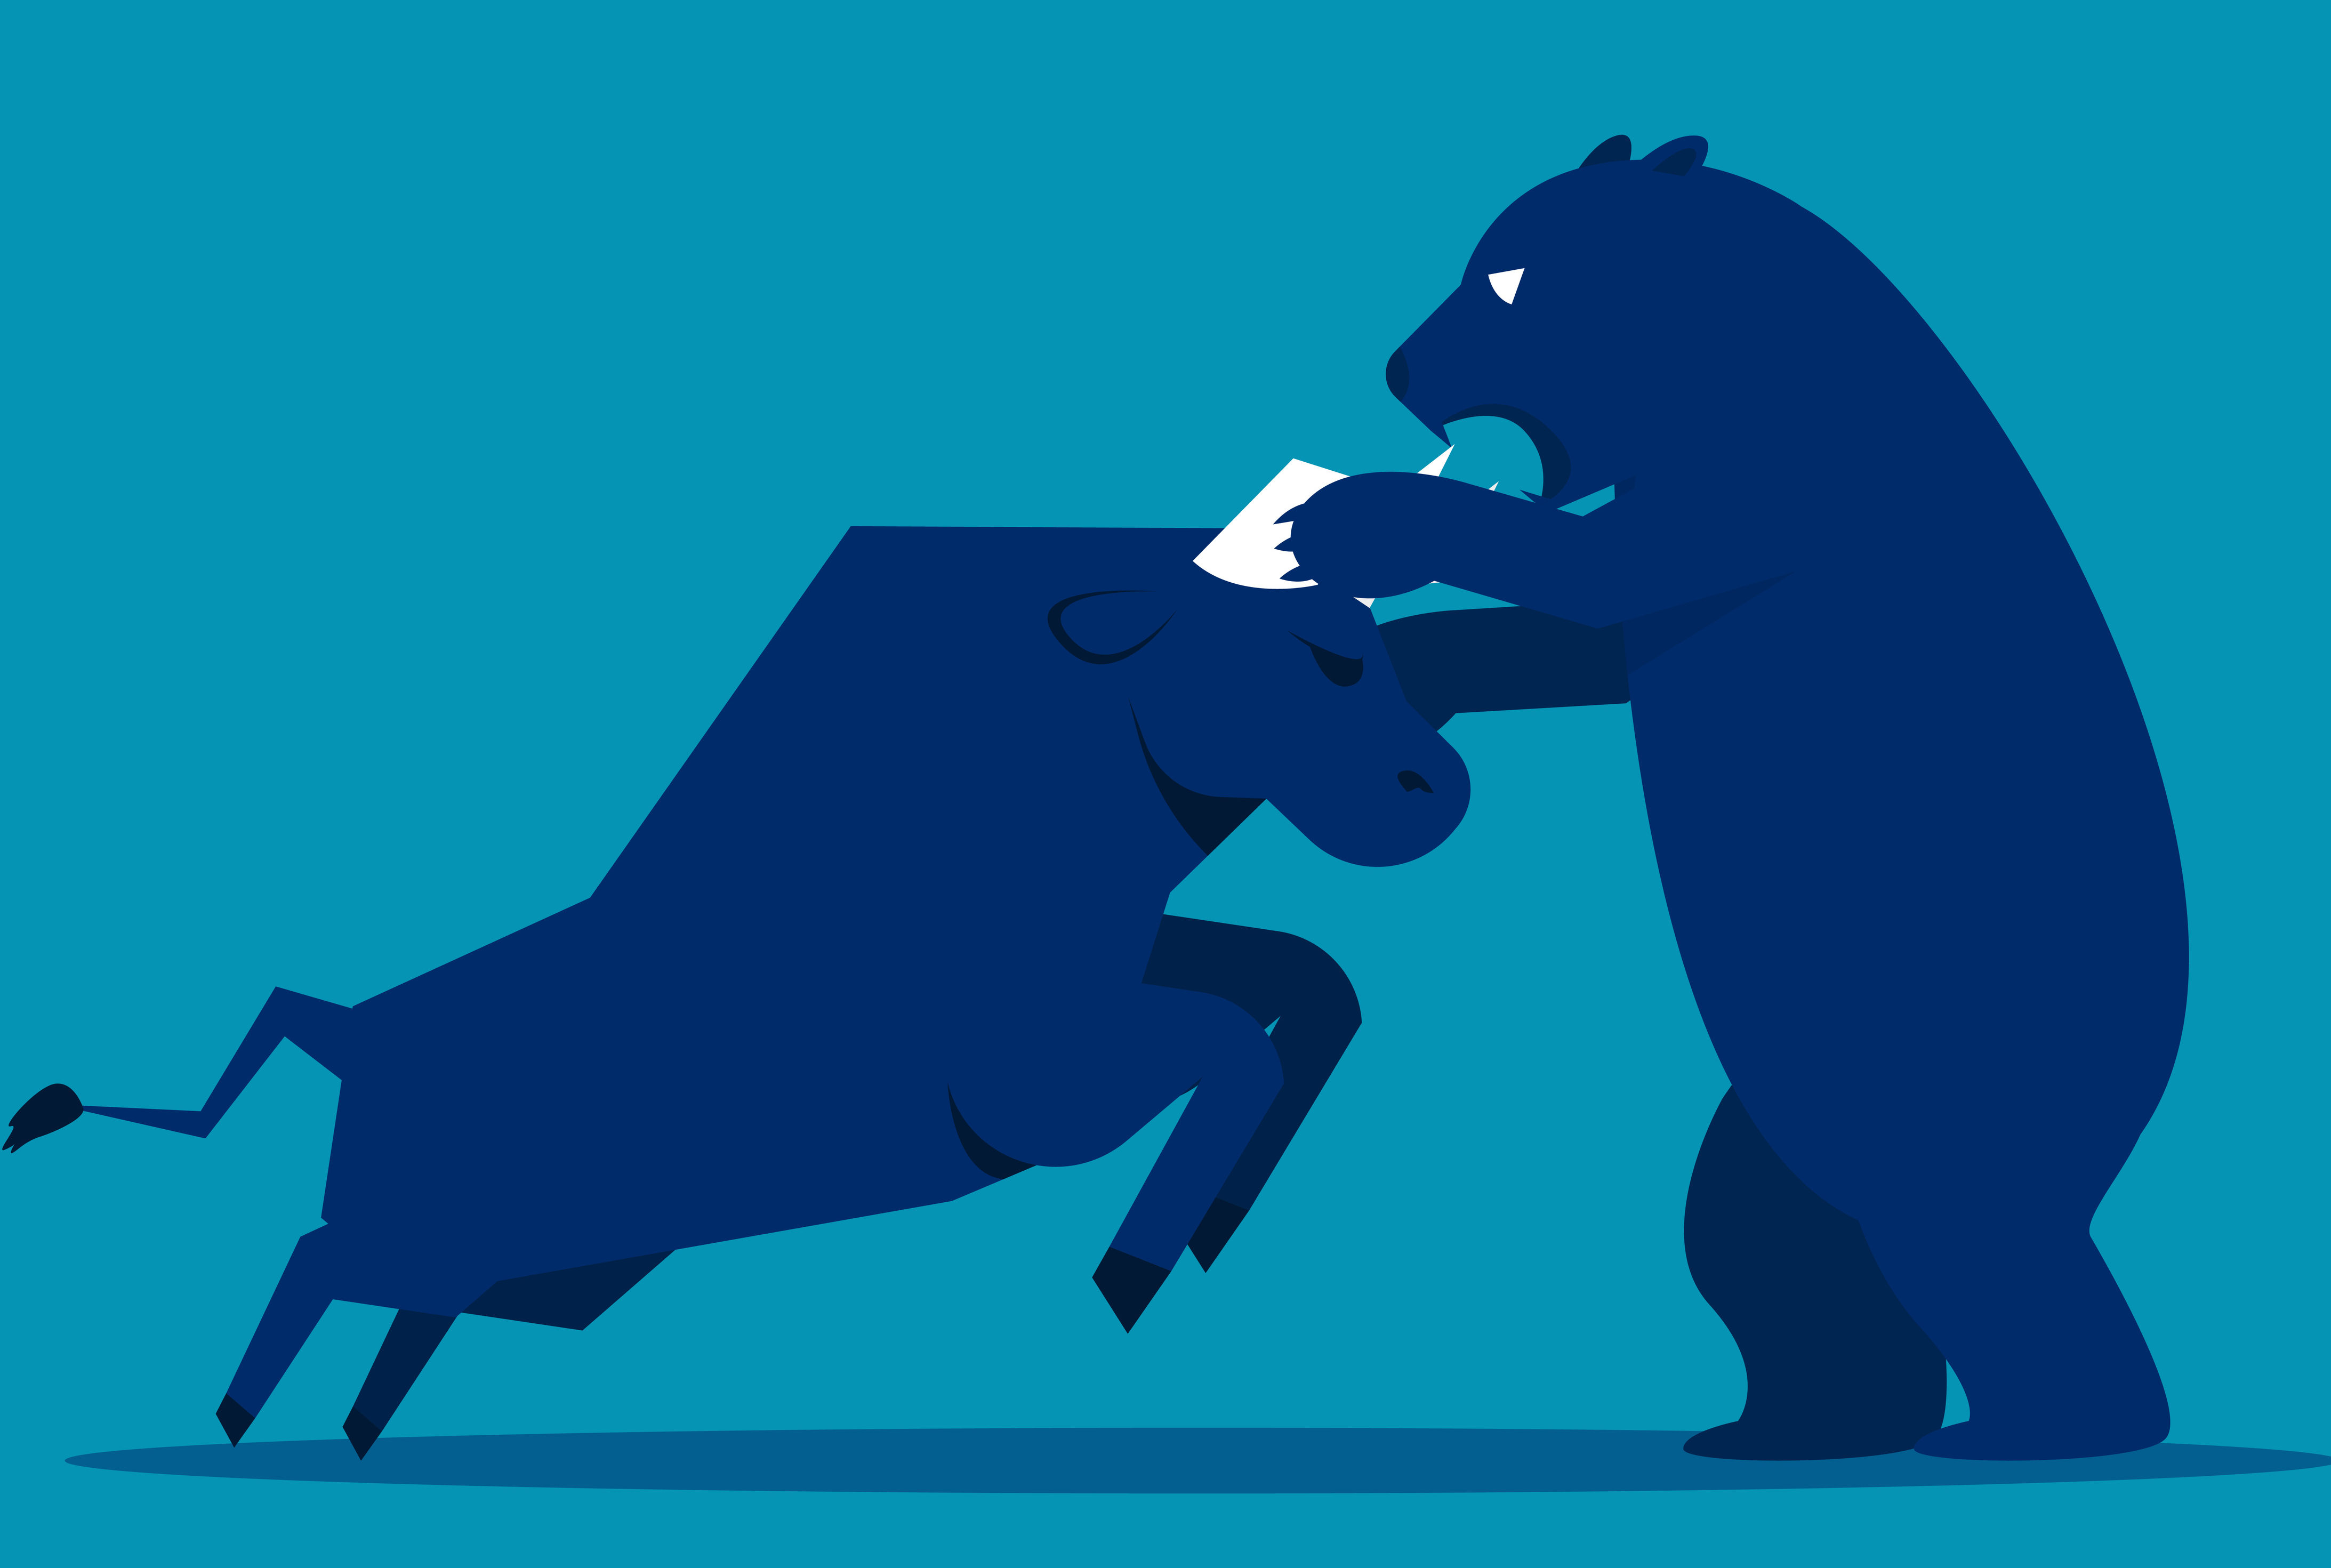 Bull Bear market presents downtrend stock market